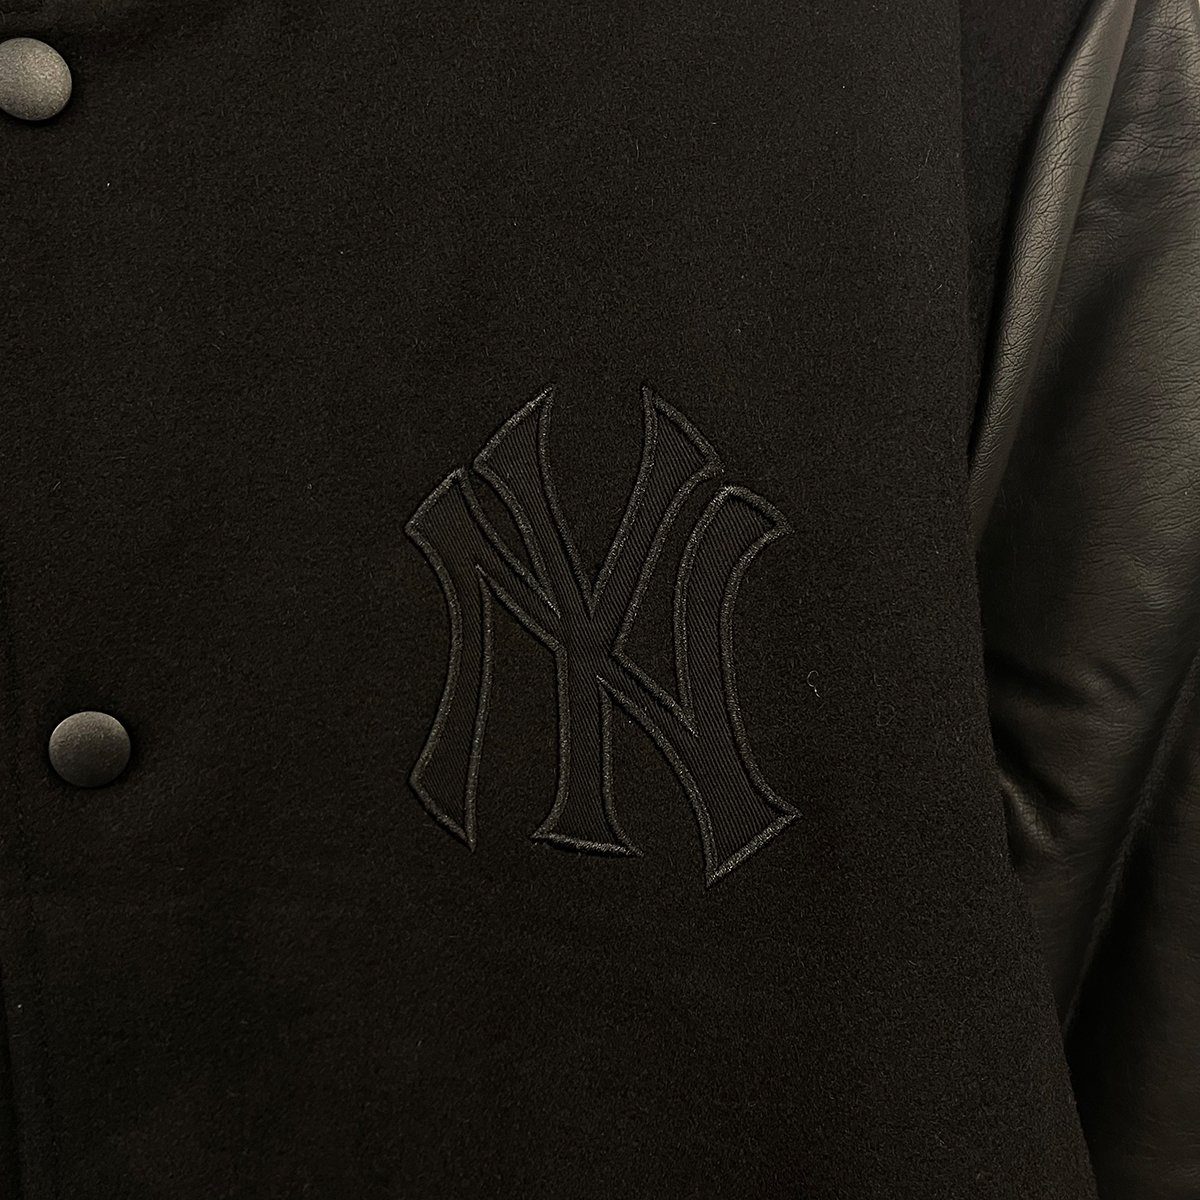 x27;47 Brand Collegejacke New York Yankees